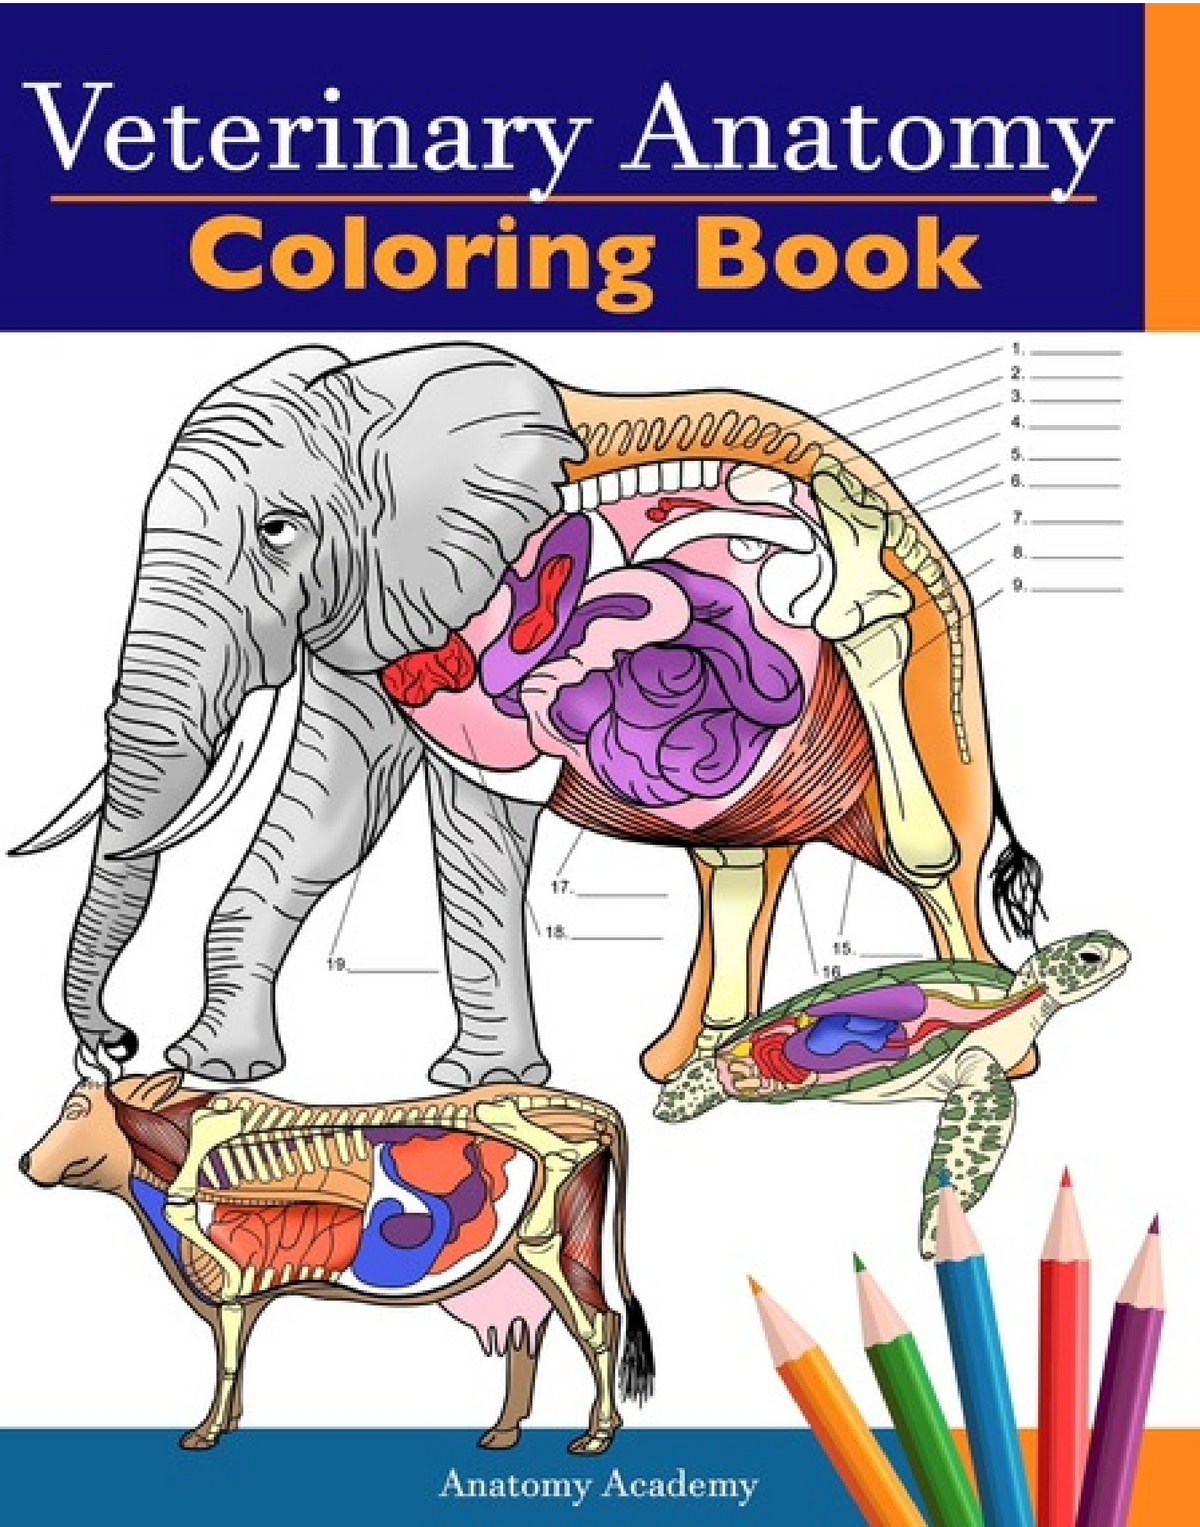 Veterinary anatomy coloring book para colorear   PDFLibrary this ...